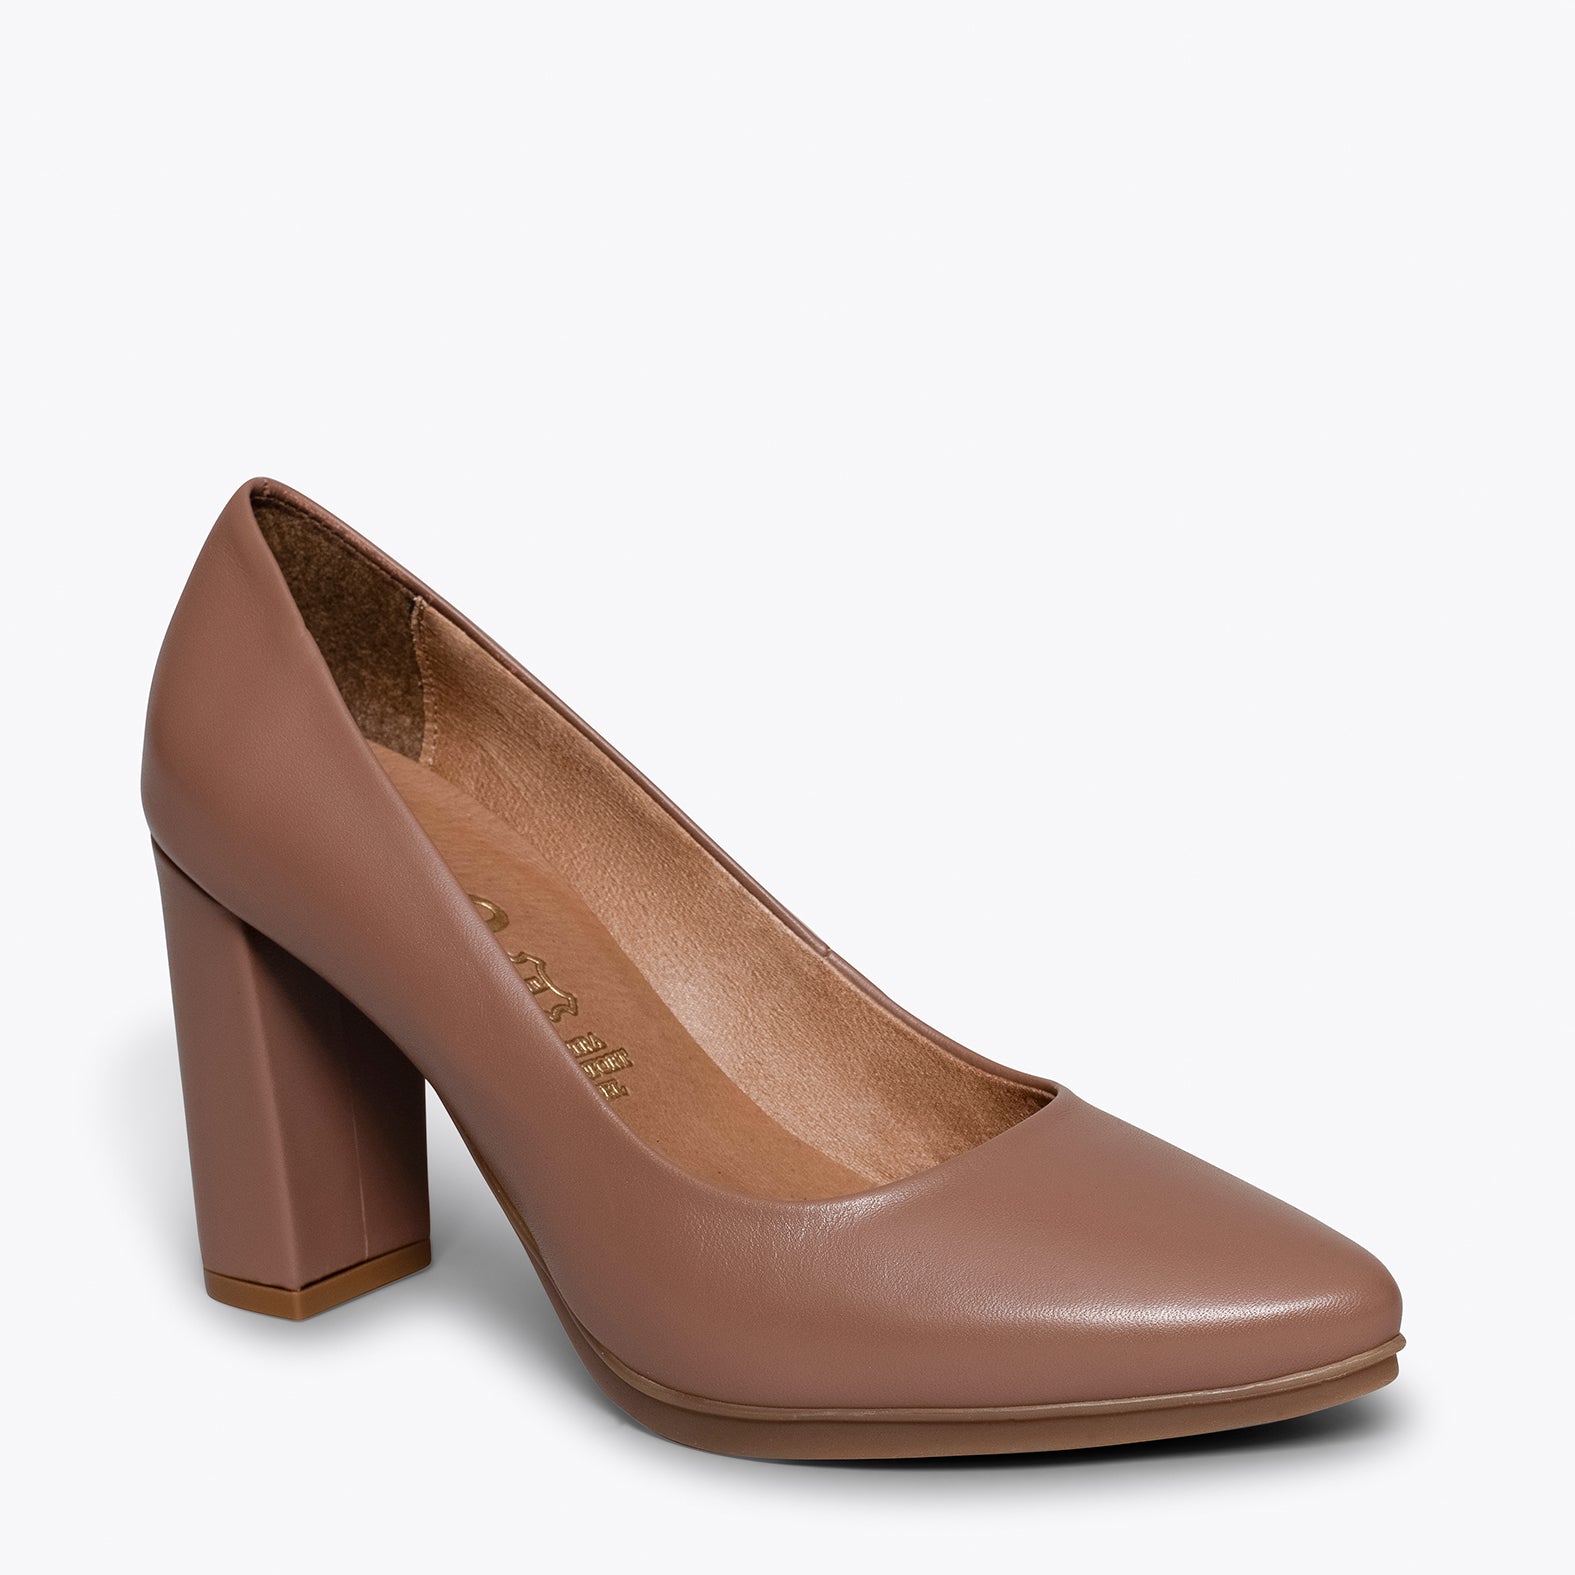 URBAN SALON – NUDE nappa leather high heel